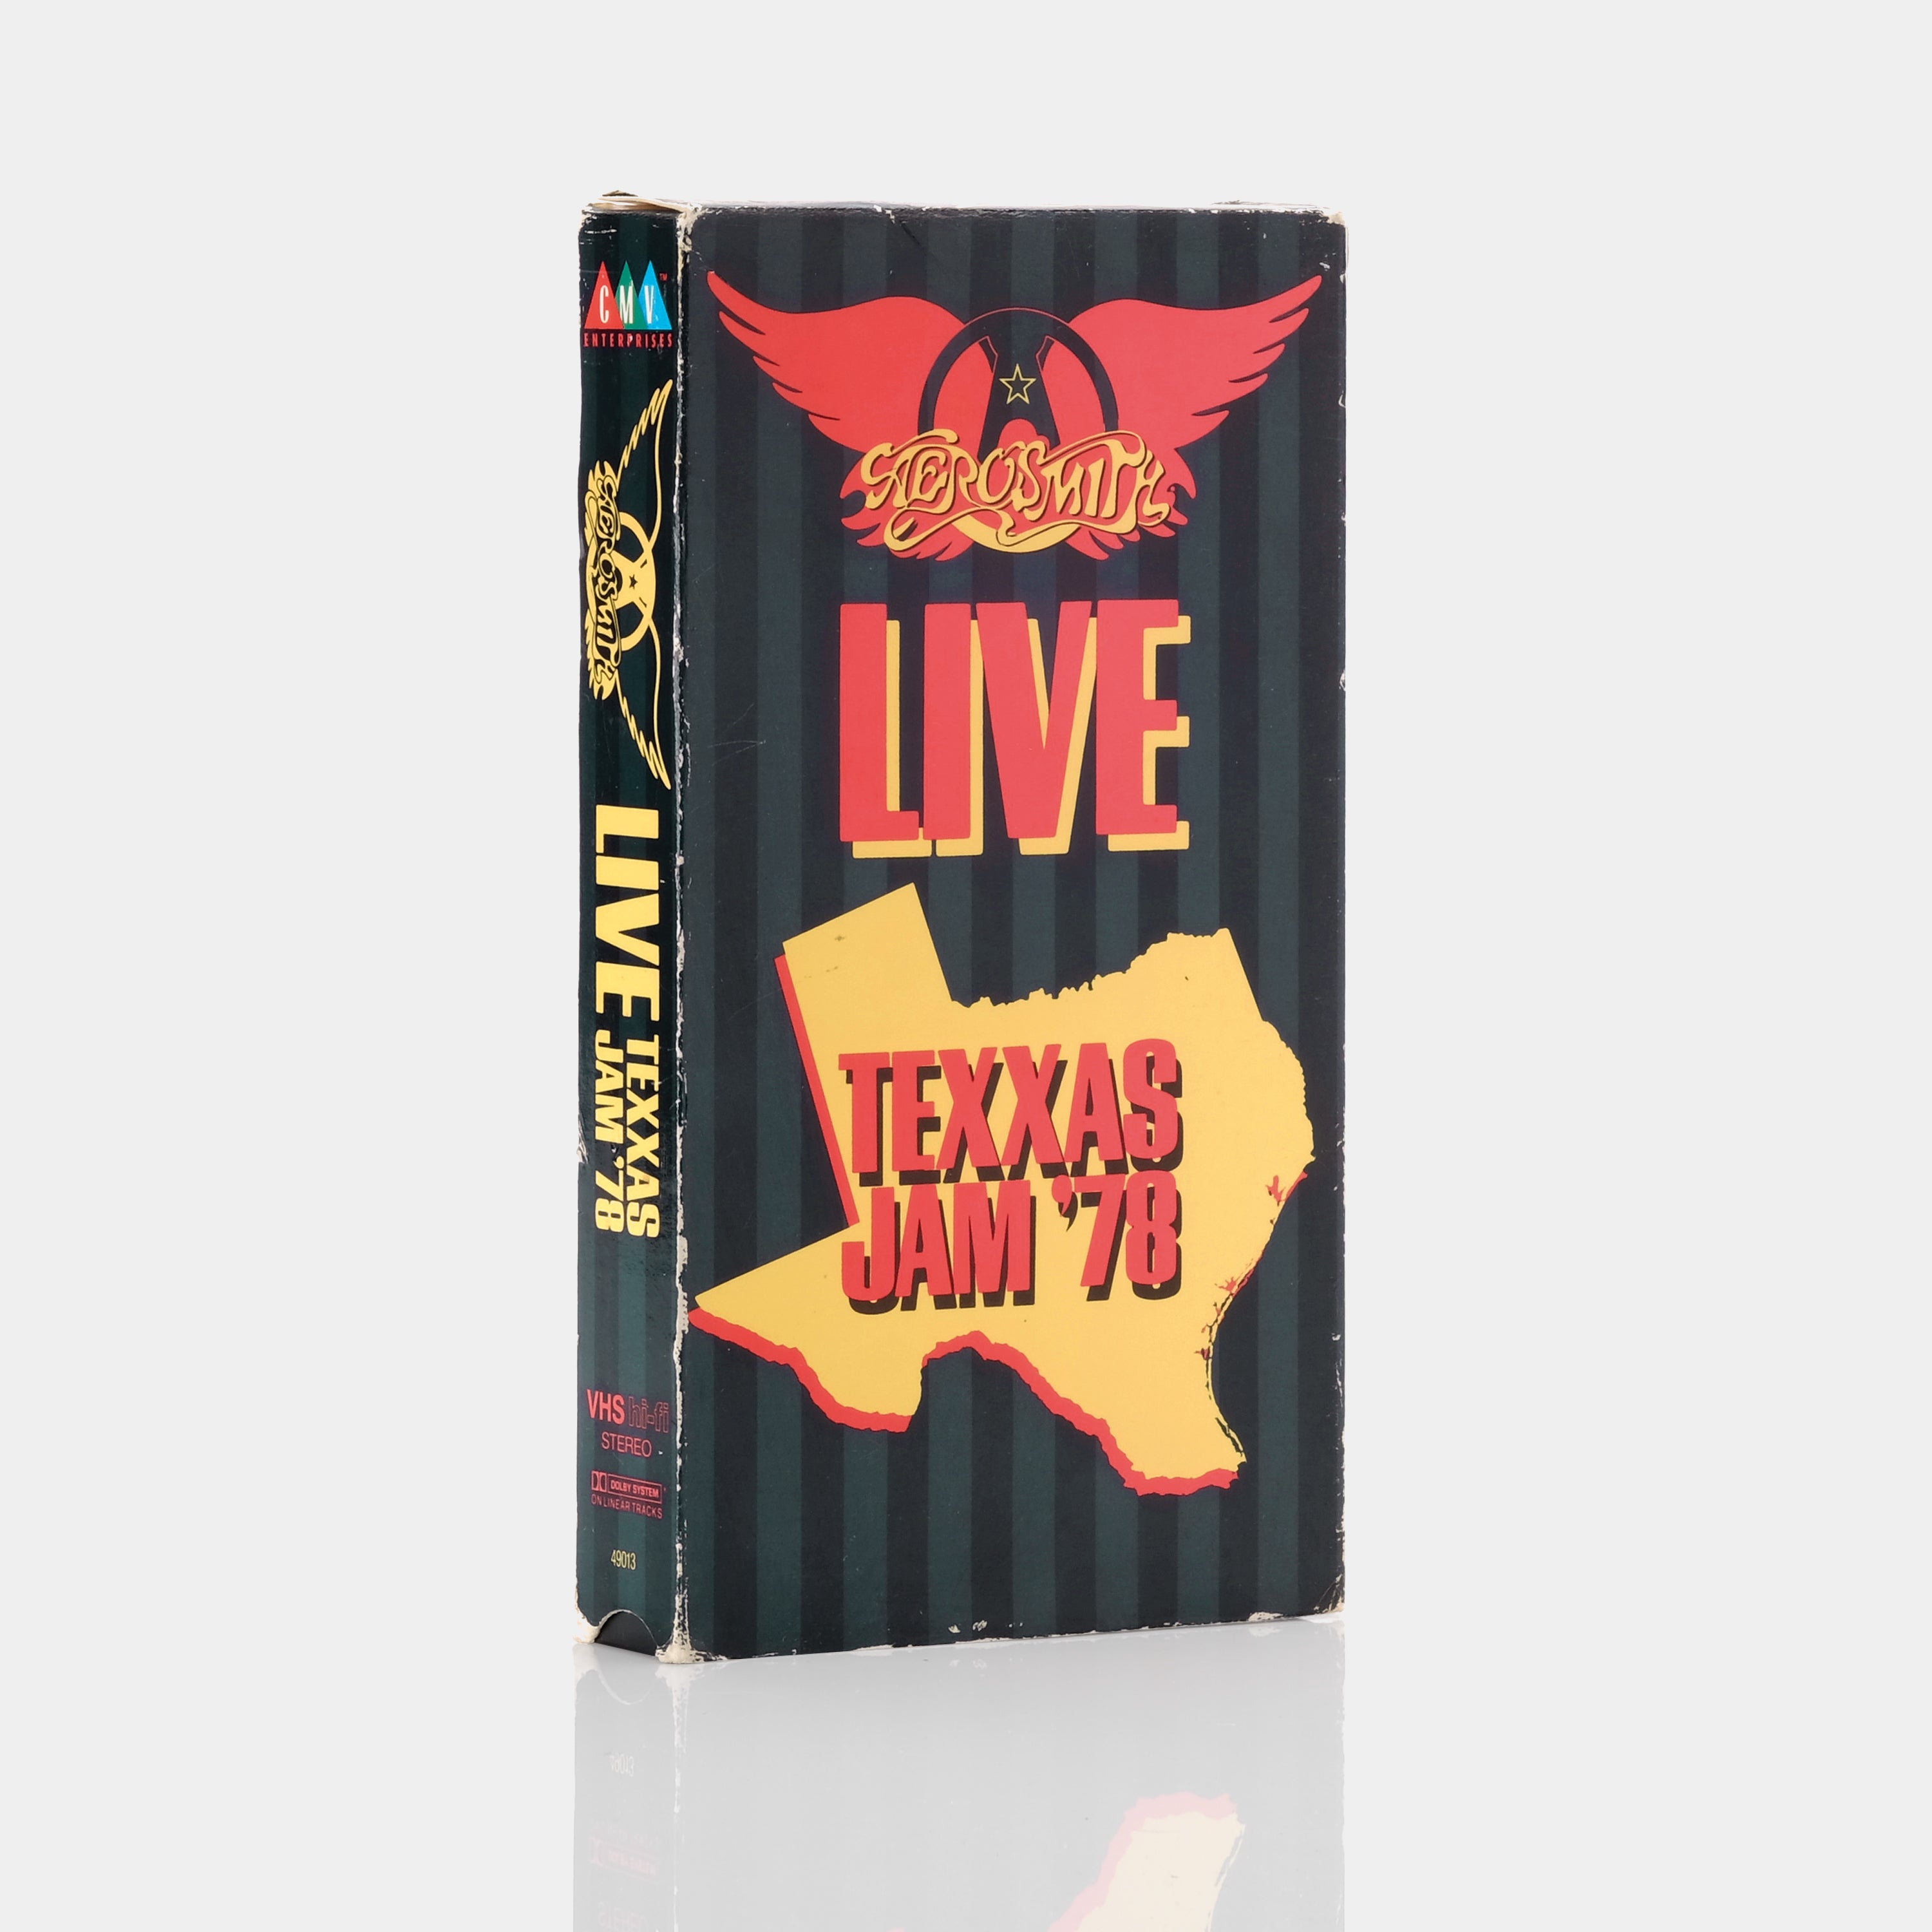 Aerosmith Live Texas Jam '78 VHS Tape